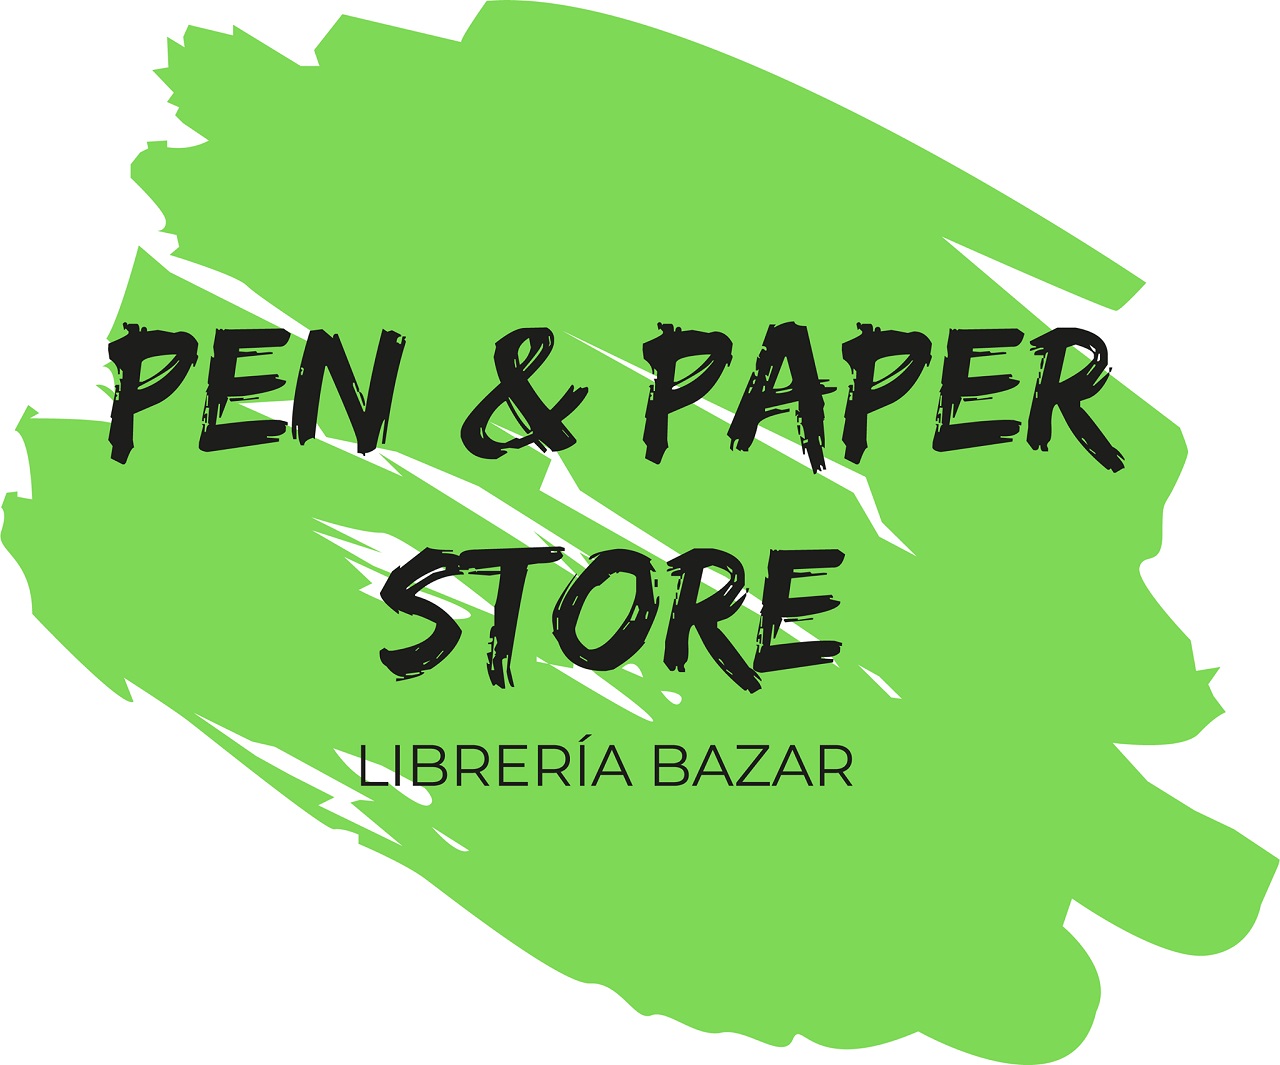 Pen & Paper Store - Librera Bazar